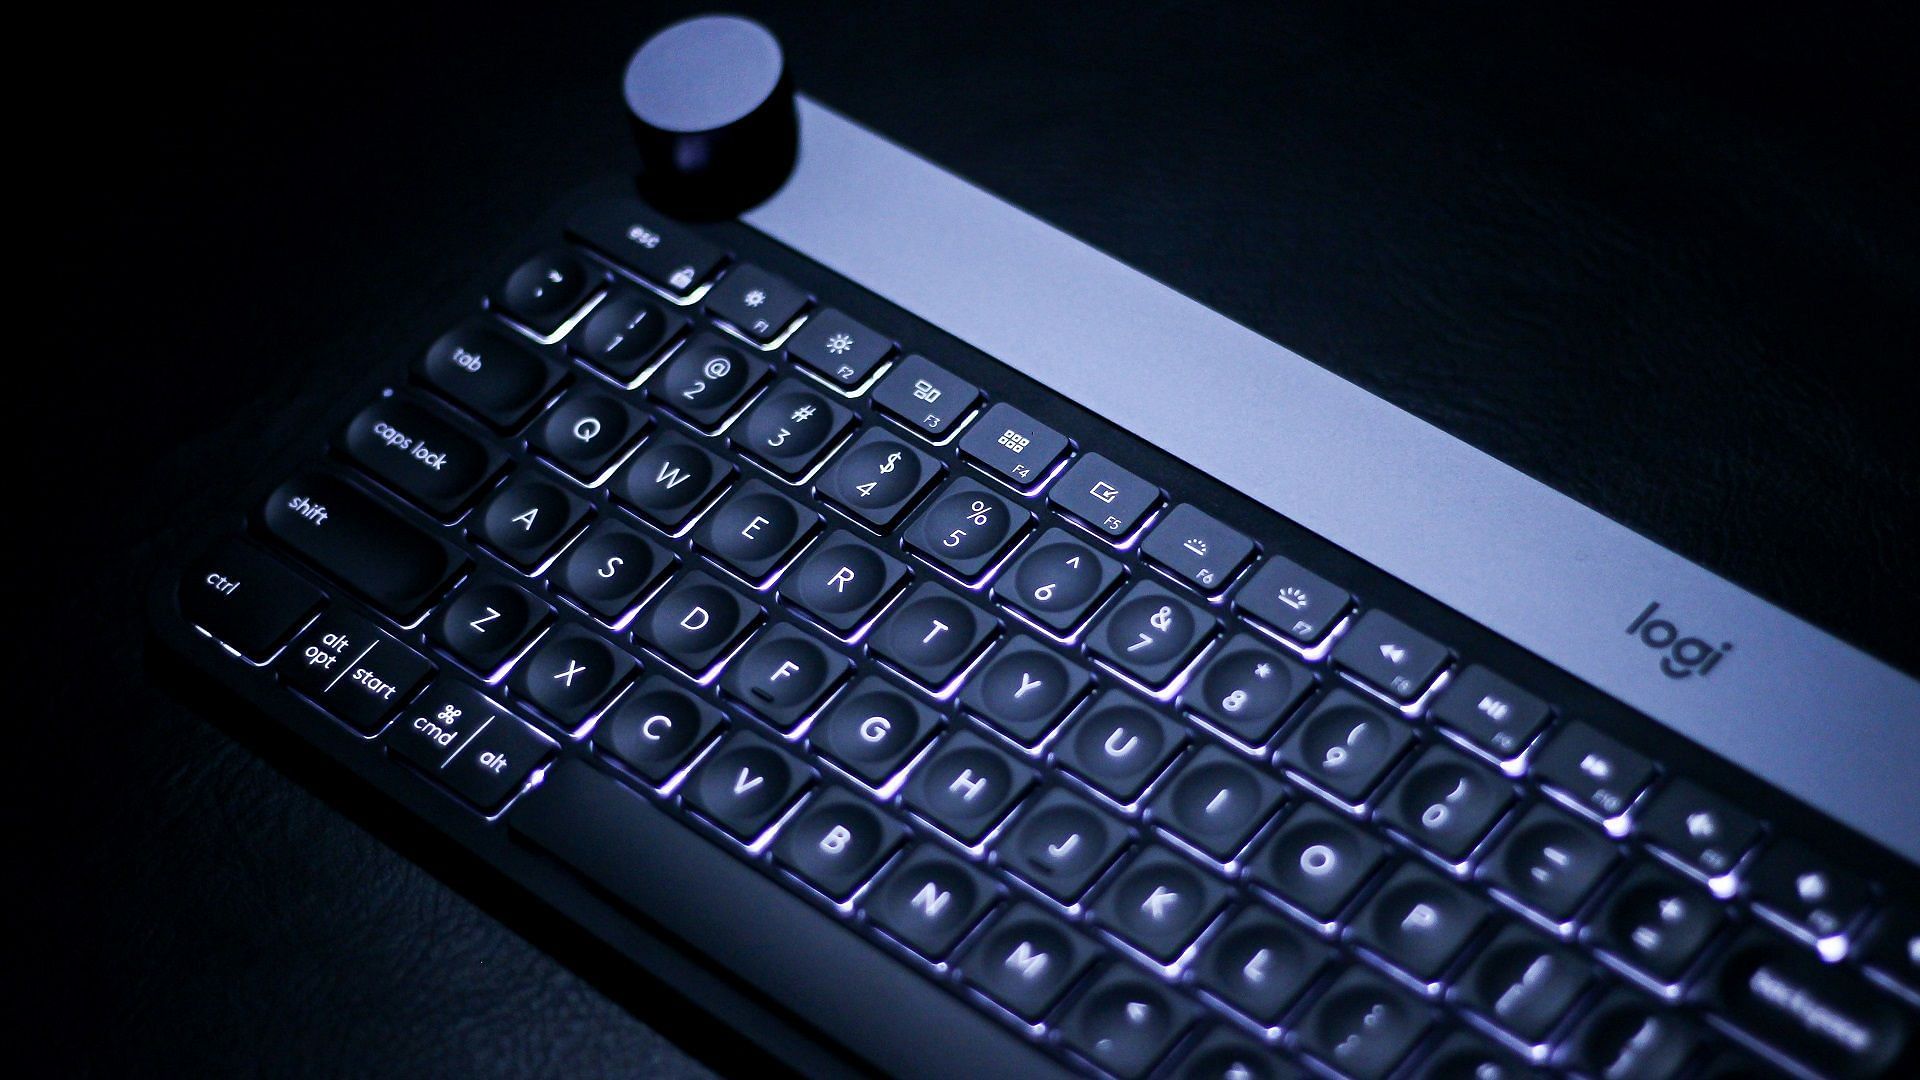  Logitech wireless membrane keyboard with creative dial (Image via Saif Ahmed/Unsplash)